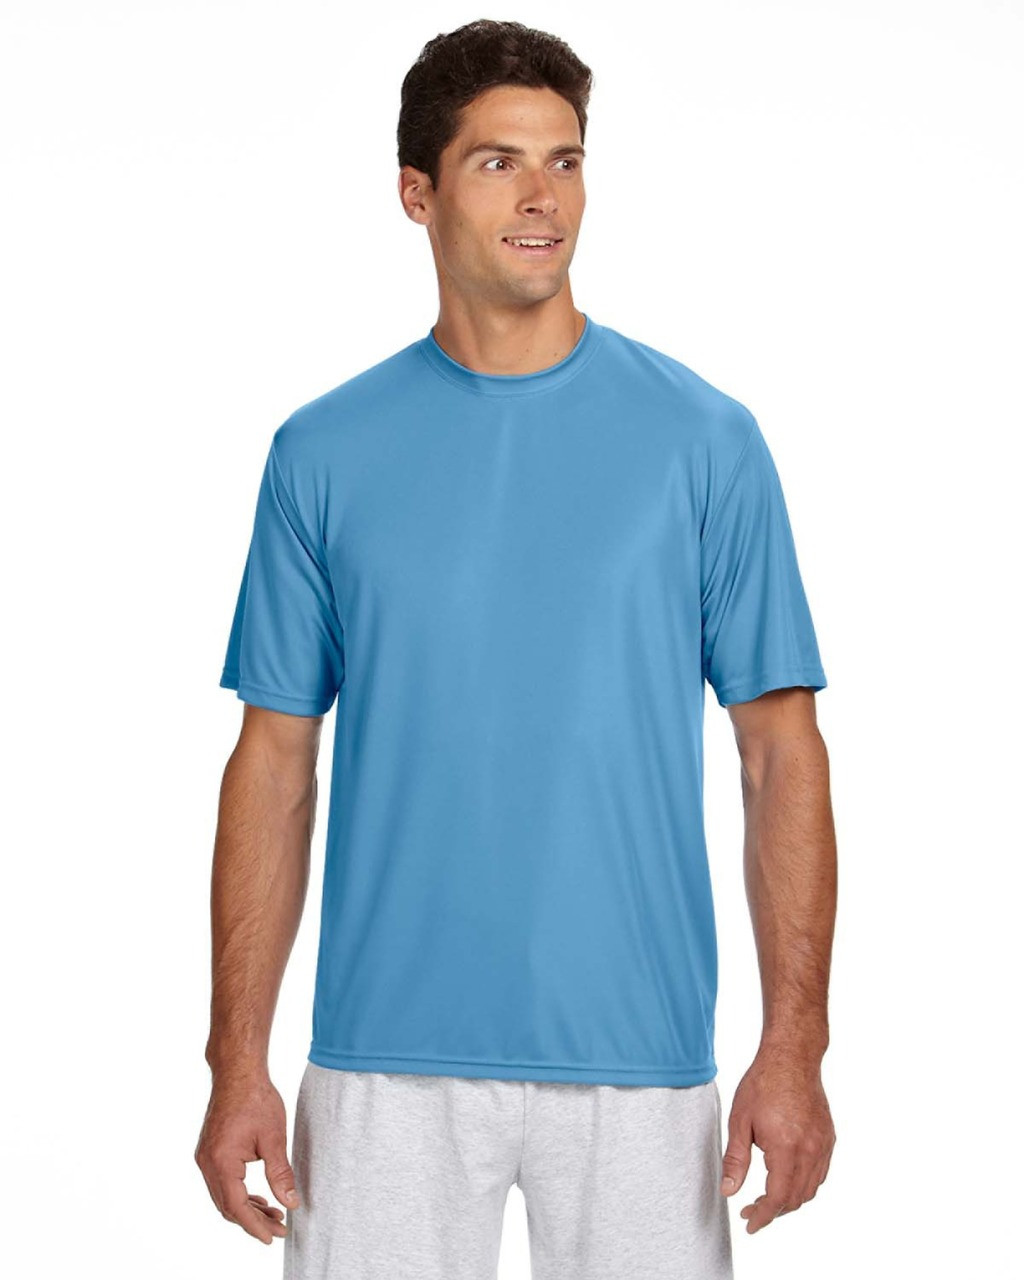 A4 N3142 Men's Cooling Performance T-Shirt - ClothingAuthority.com